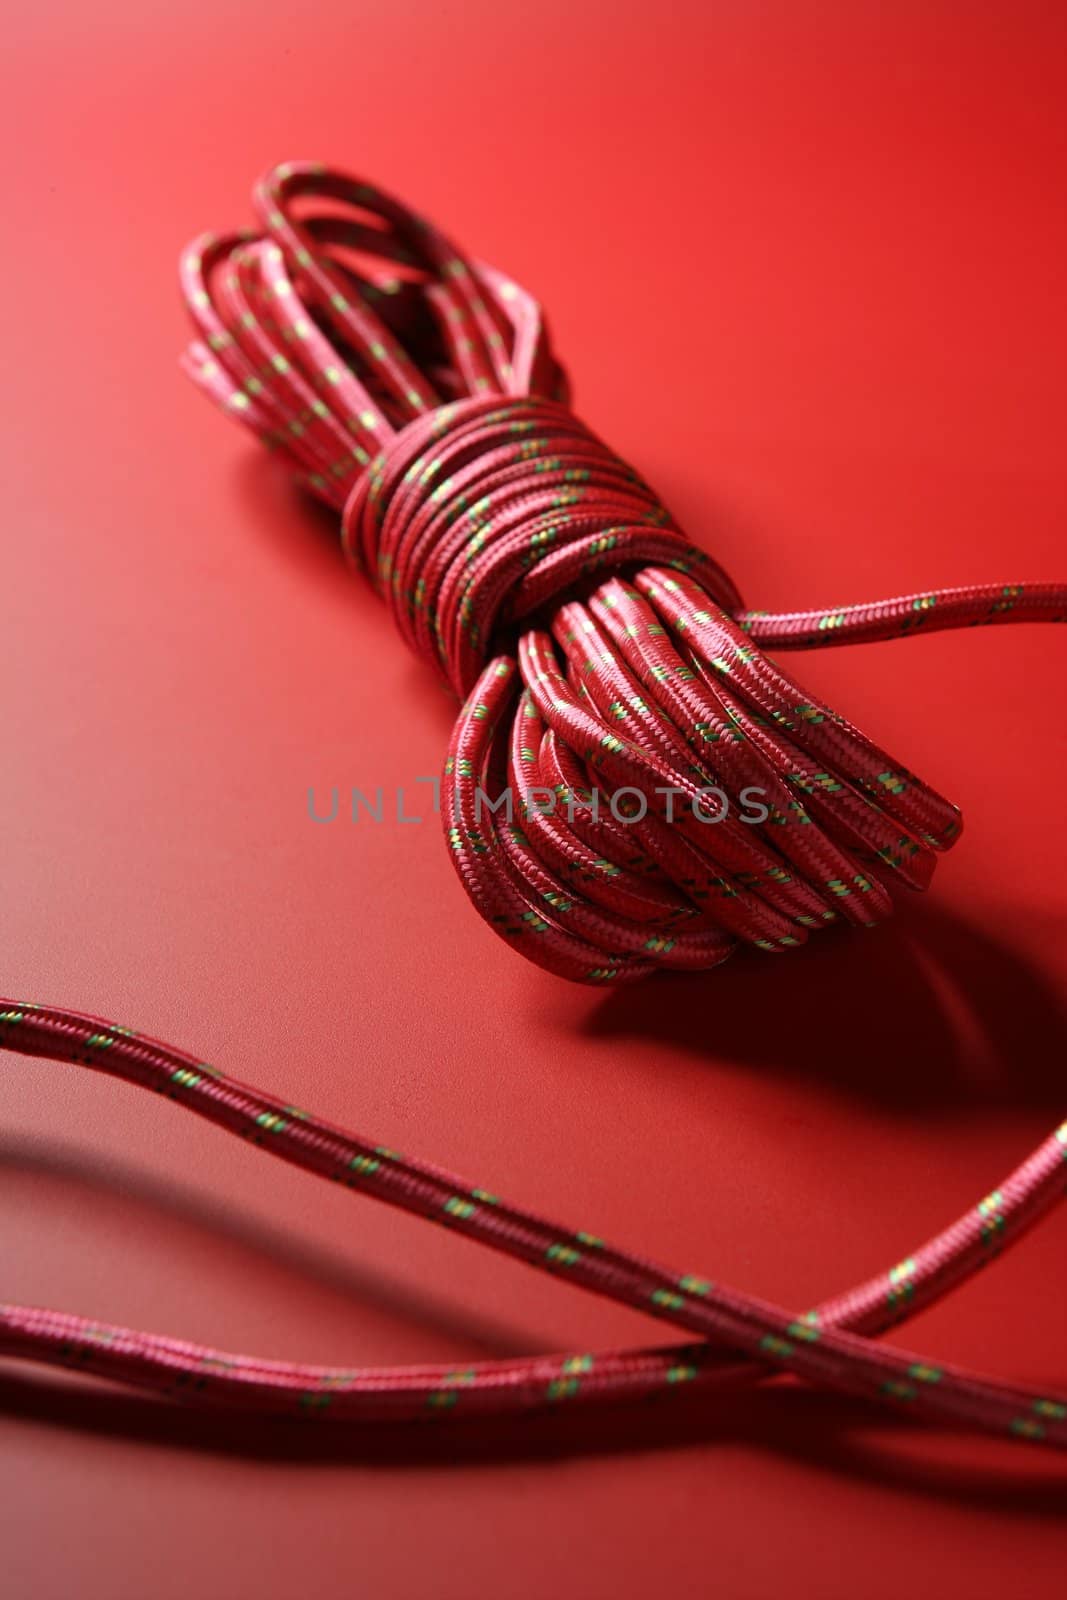 Red thread spool on monochrome background by lunamarina